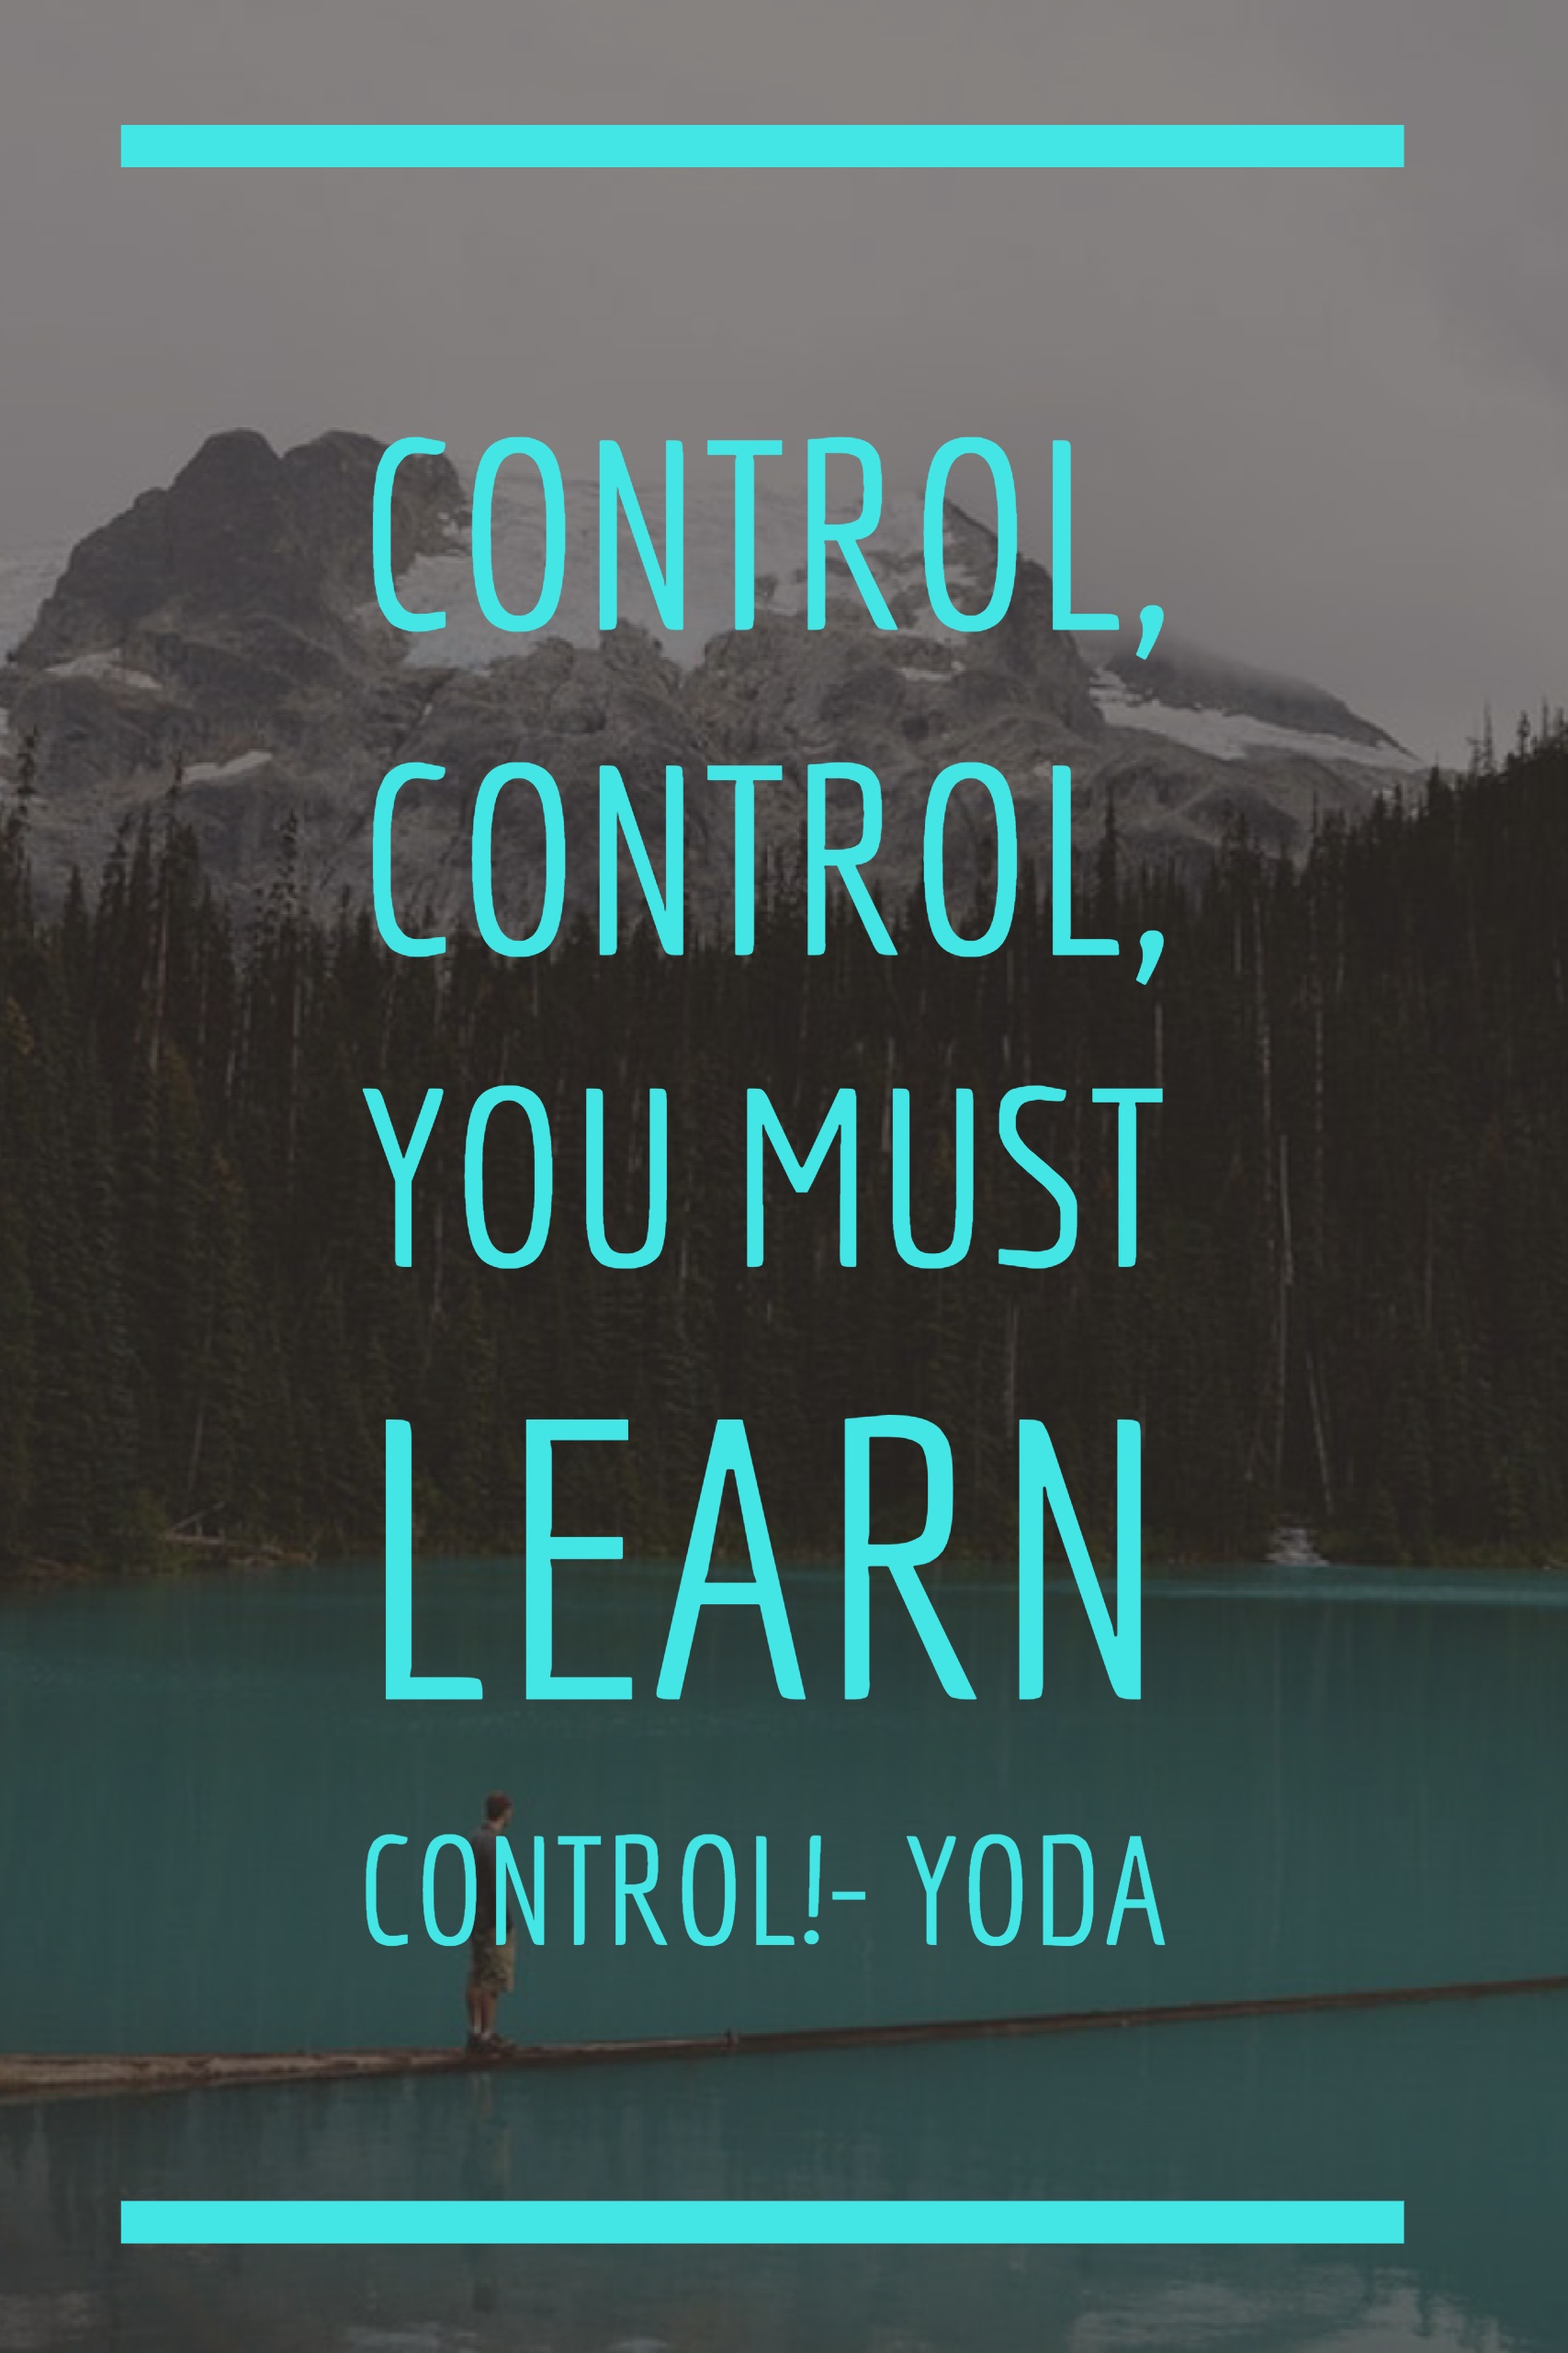 “Control, control, you must learn control!” -Yoda